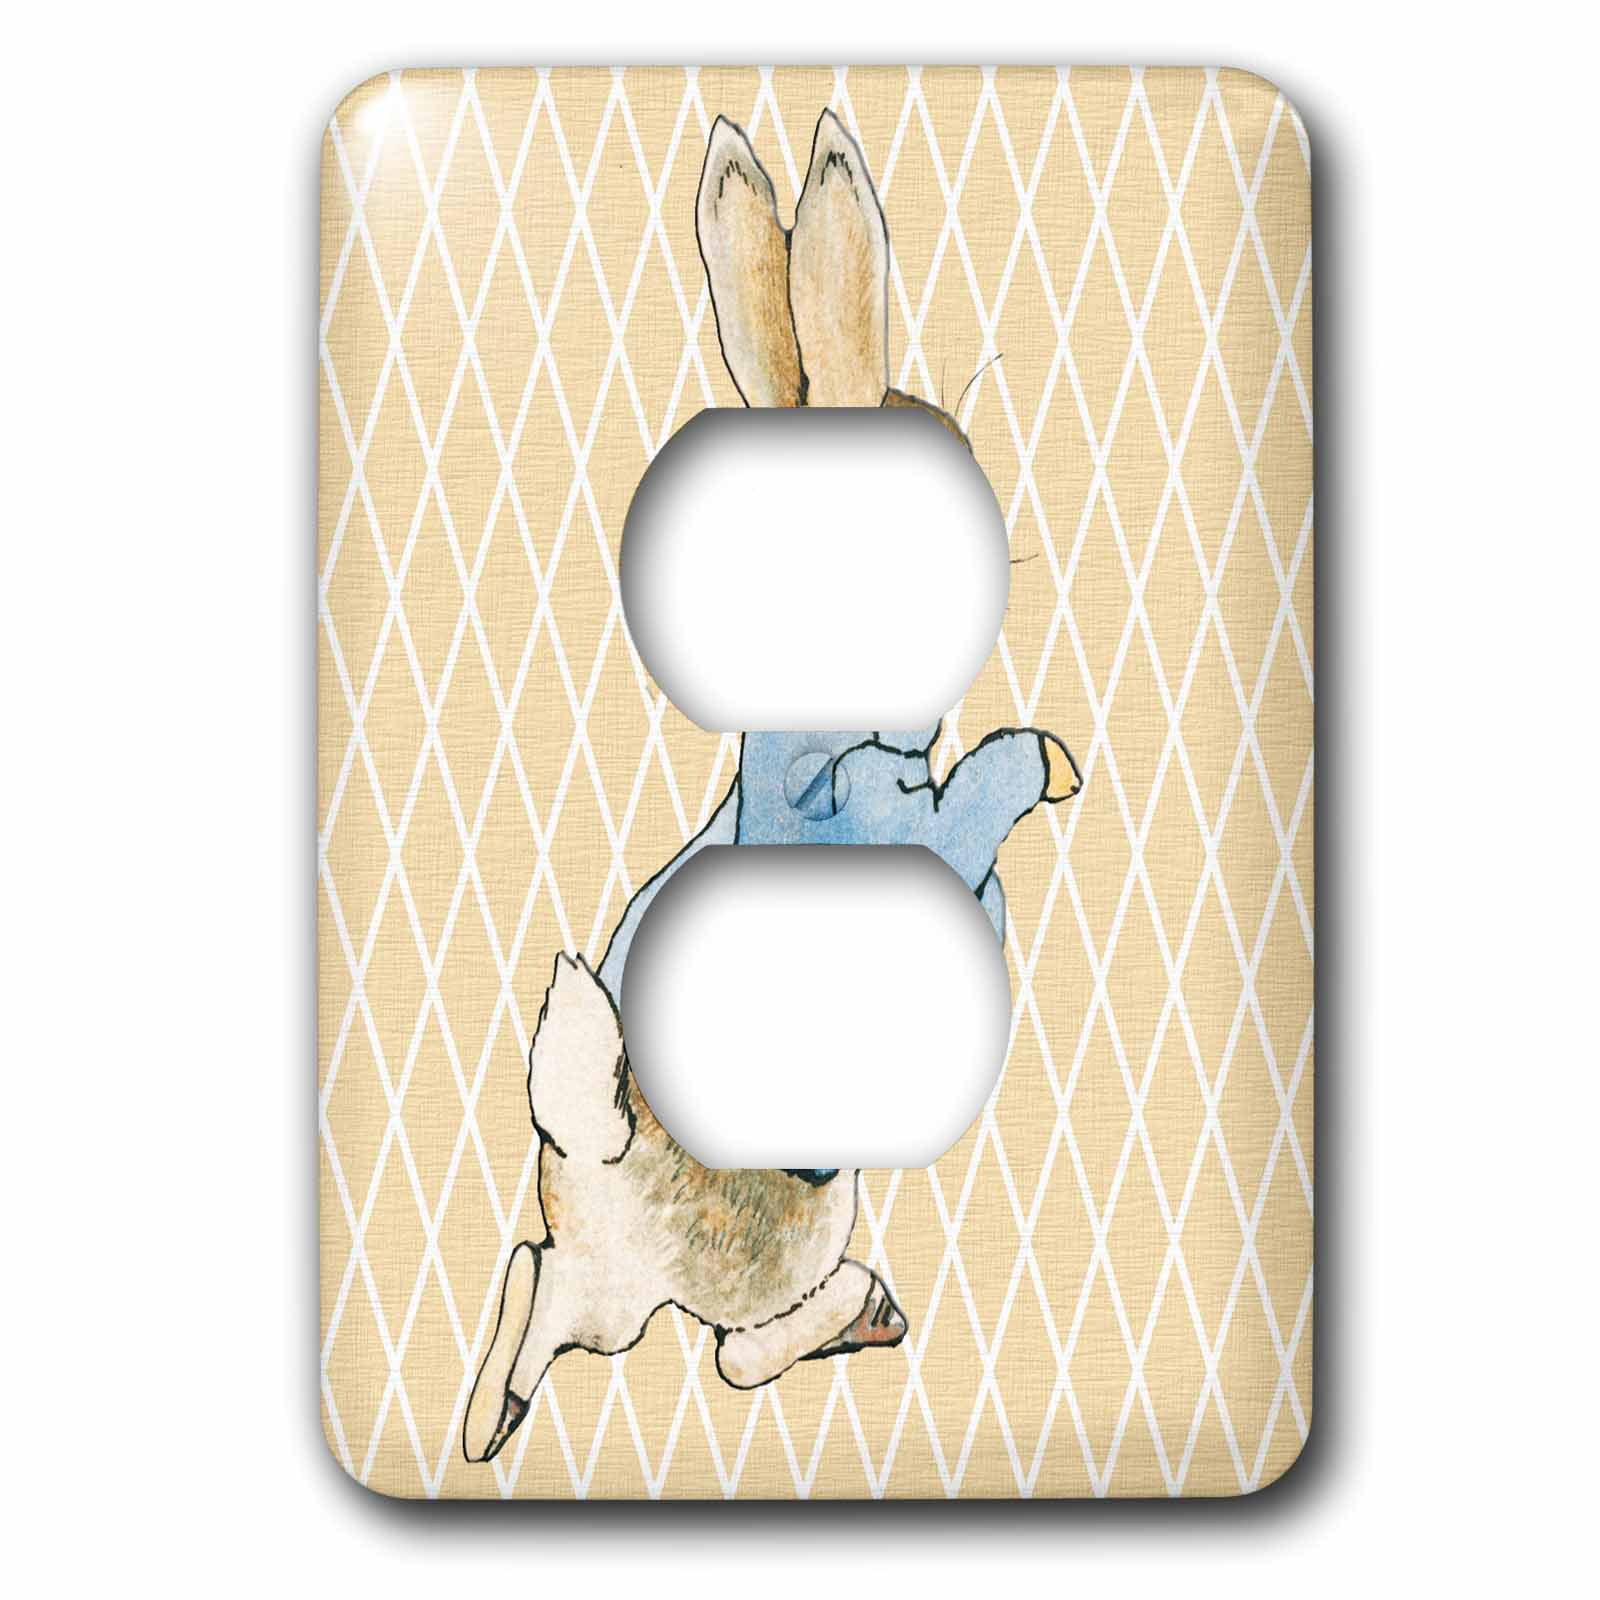 3dRose lsp_79399_6 Peter Rabbit Vintage Art Plug Outlet Cover